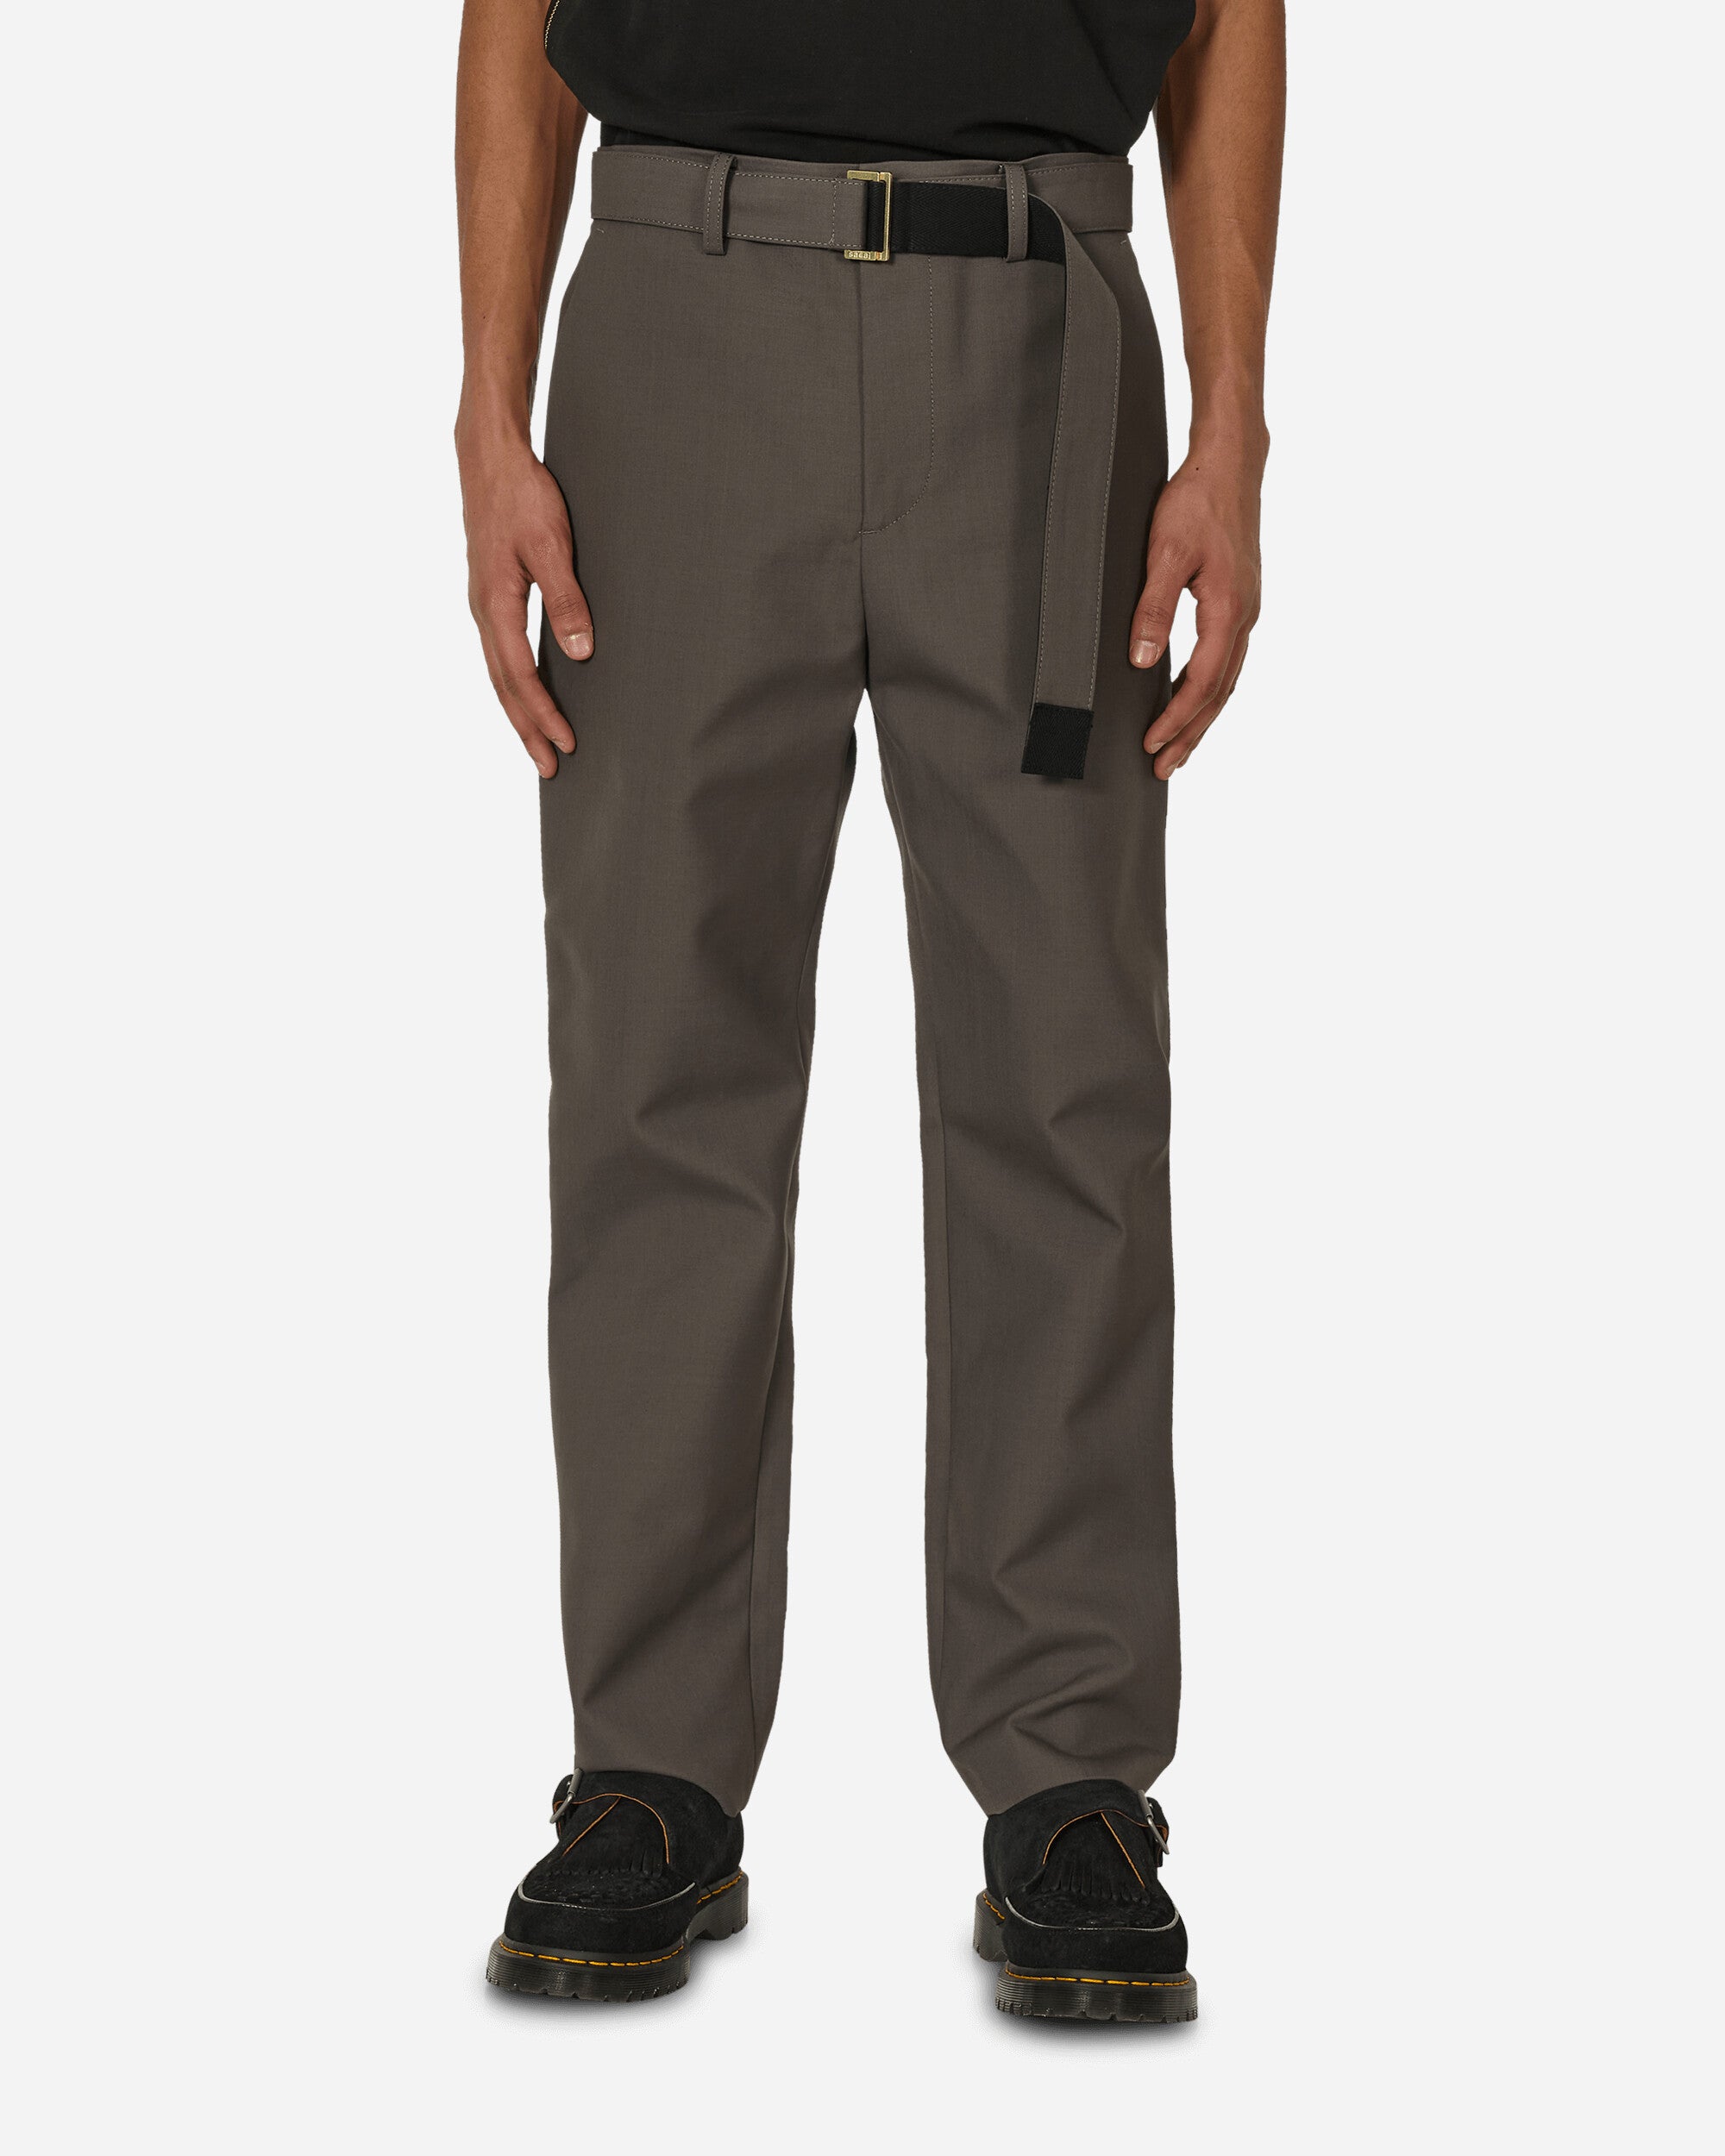 sacai Sacai X Carhartt Wip Suiting Bonding Pants Taupe Pants Trousers 24-03389M 550